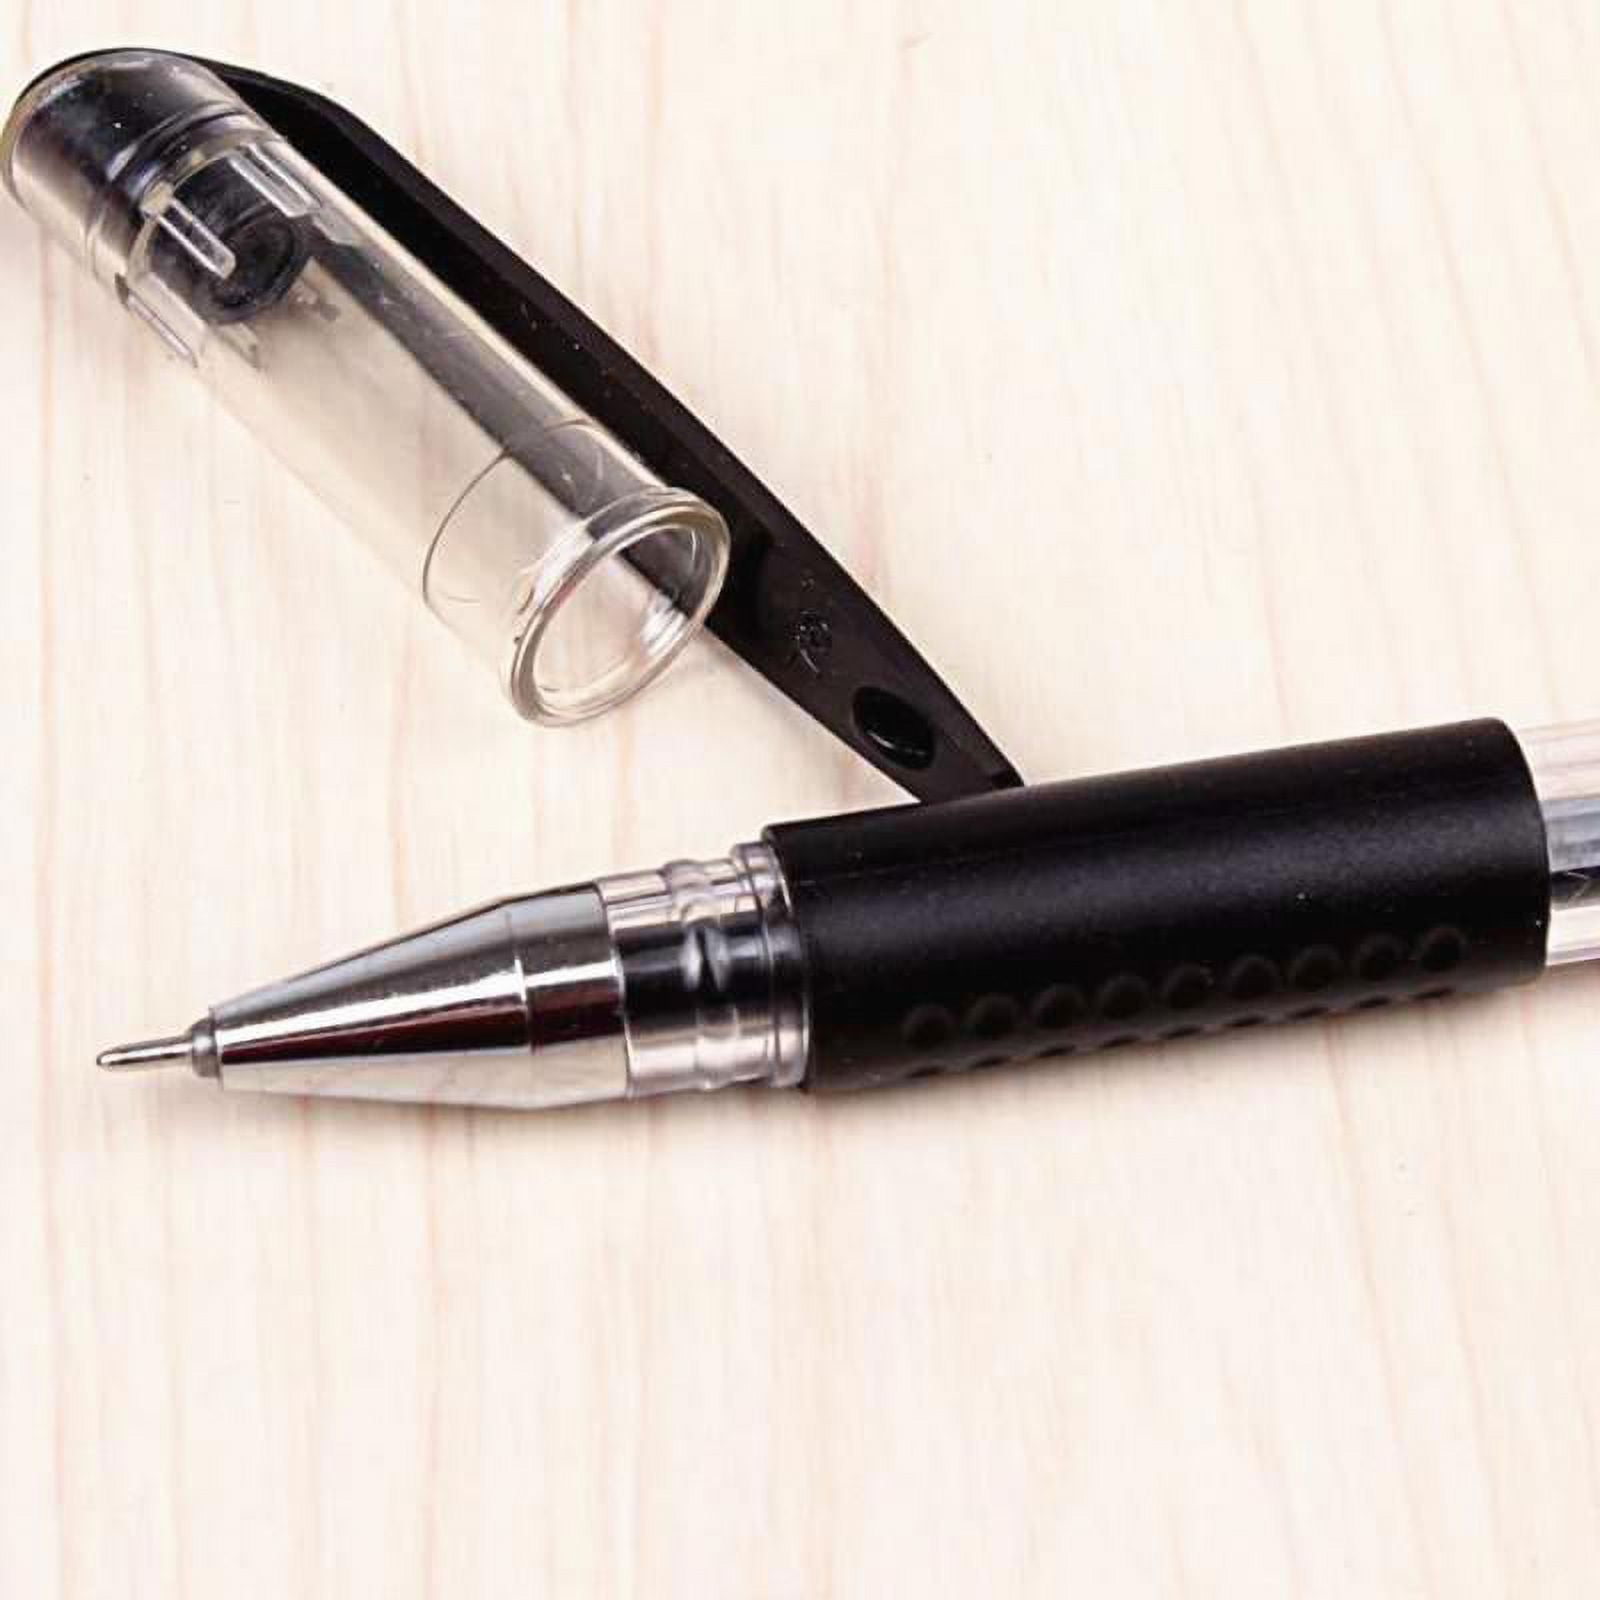 Dropship 4pcs Ballpoint Pens,Fine Point Smooth Writing Pens,Metal